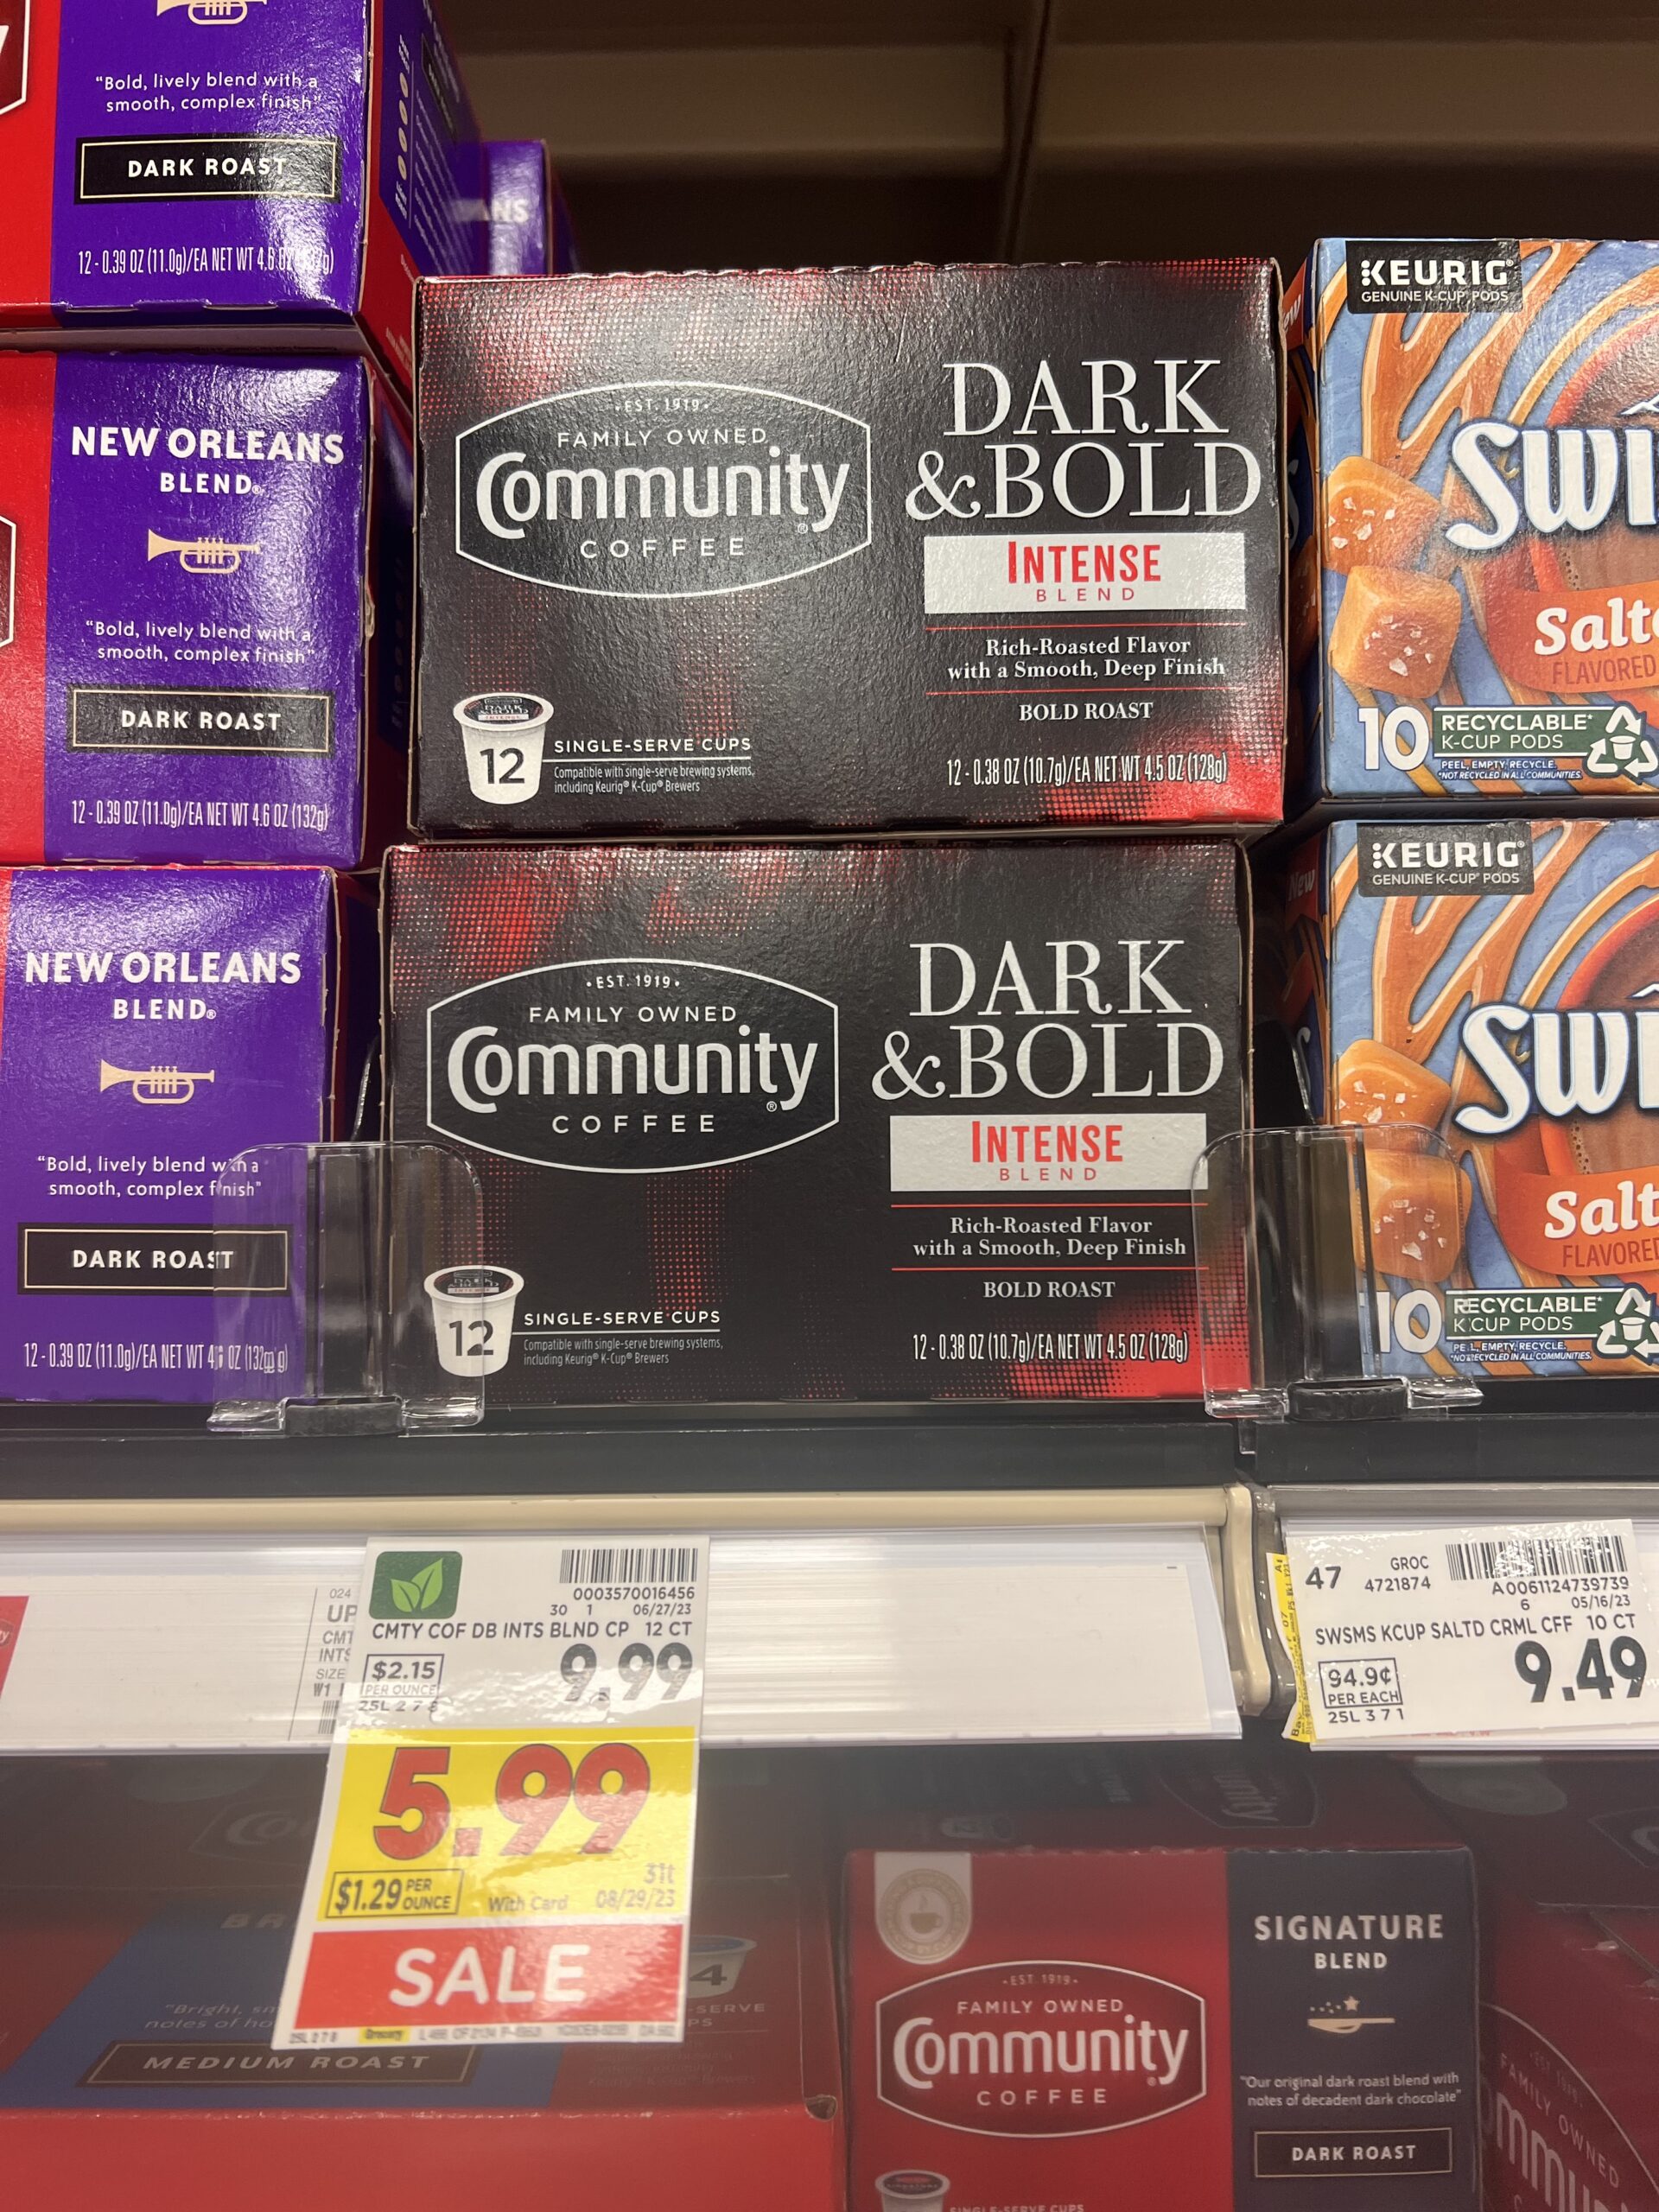 community coffee dark and bold kroger shelf image 1